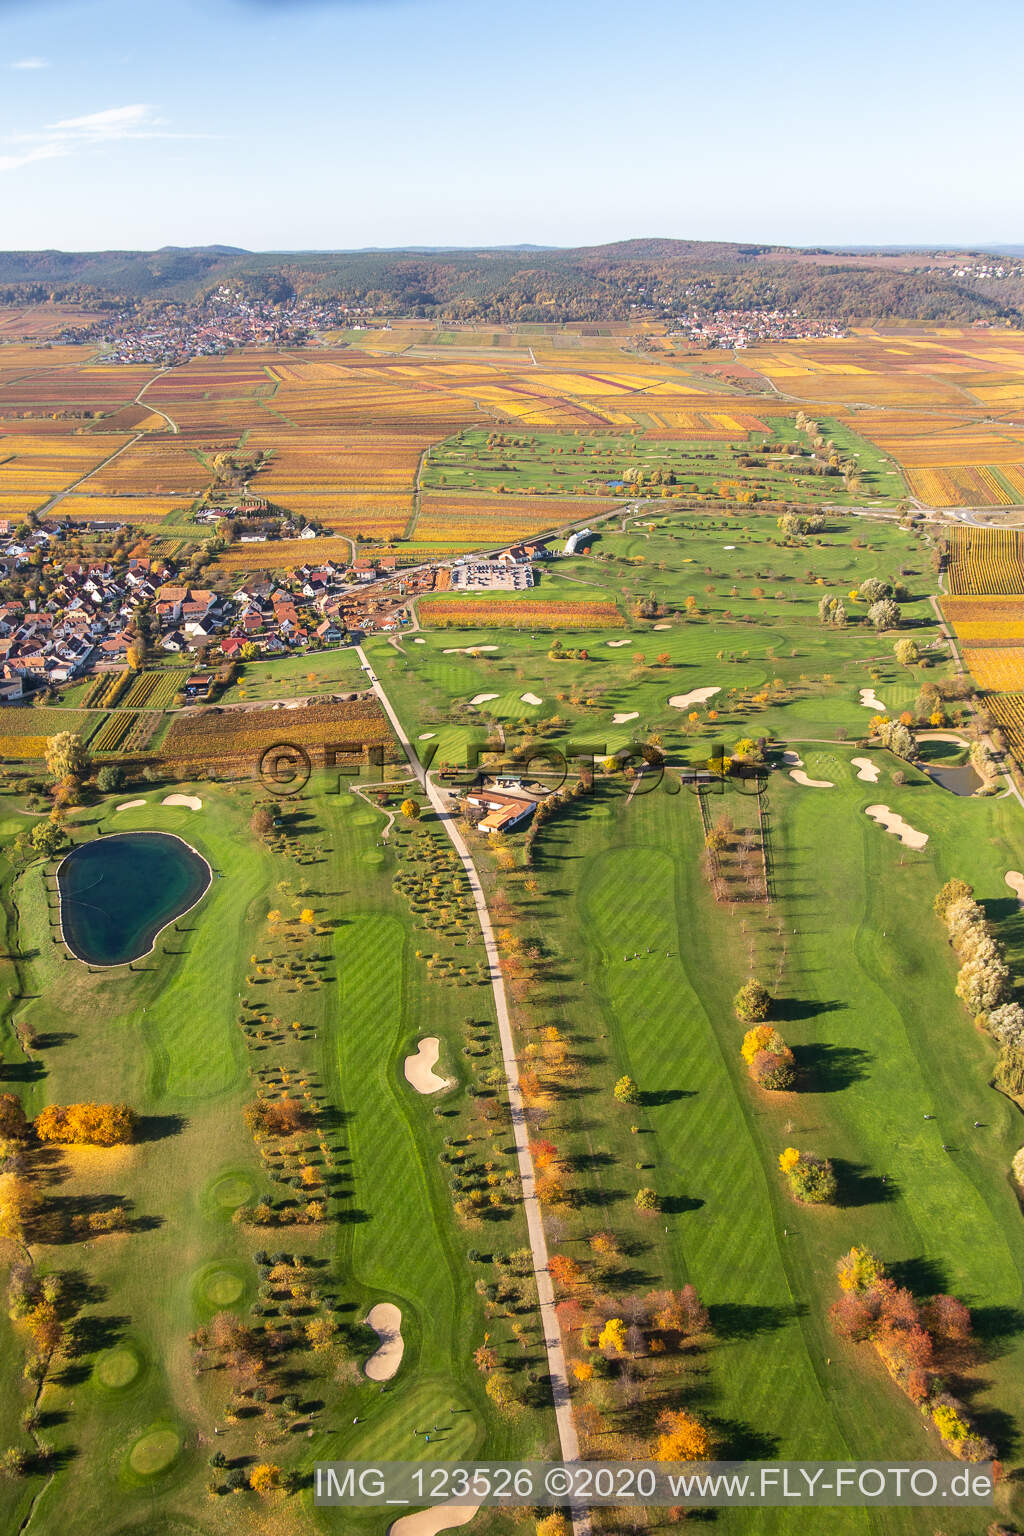 Grounds of the Golf course at Golfgarten Deutsche Weinstrasse - Dackenheim - GOLF absolute in Dackenheim in the state Rhineland-Palatinate, Germany from above